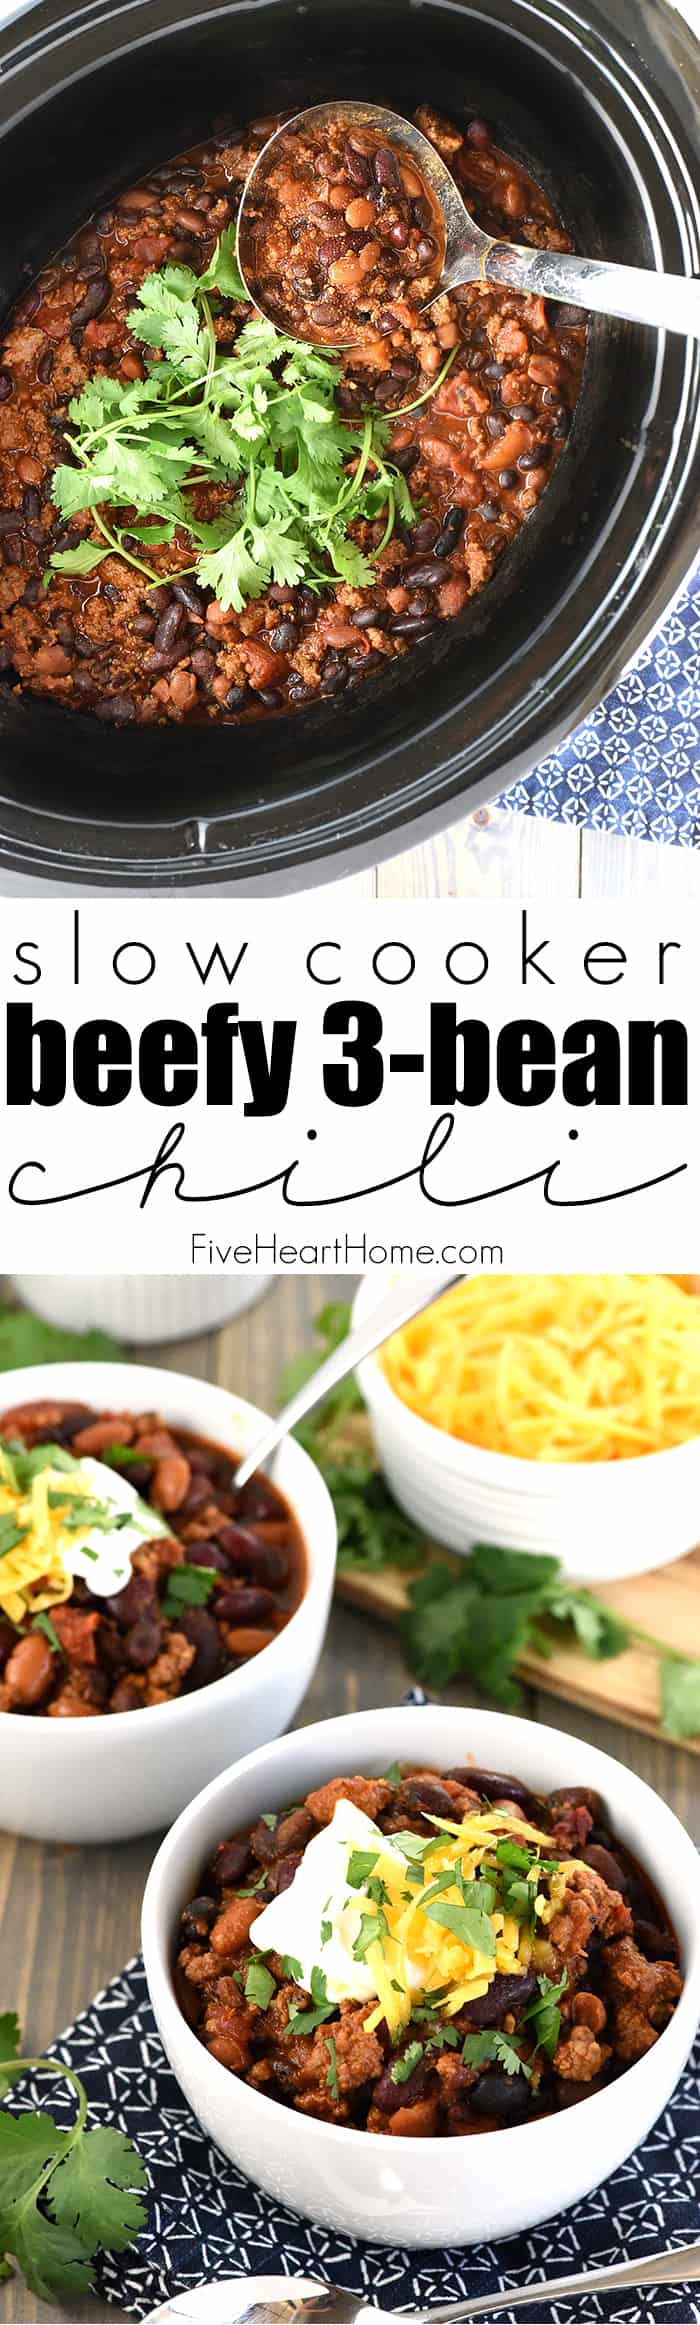 Slow Cooker Beefy Three Bean Chili Fivehearthome